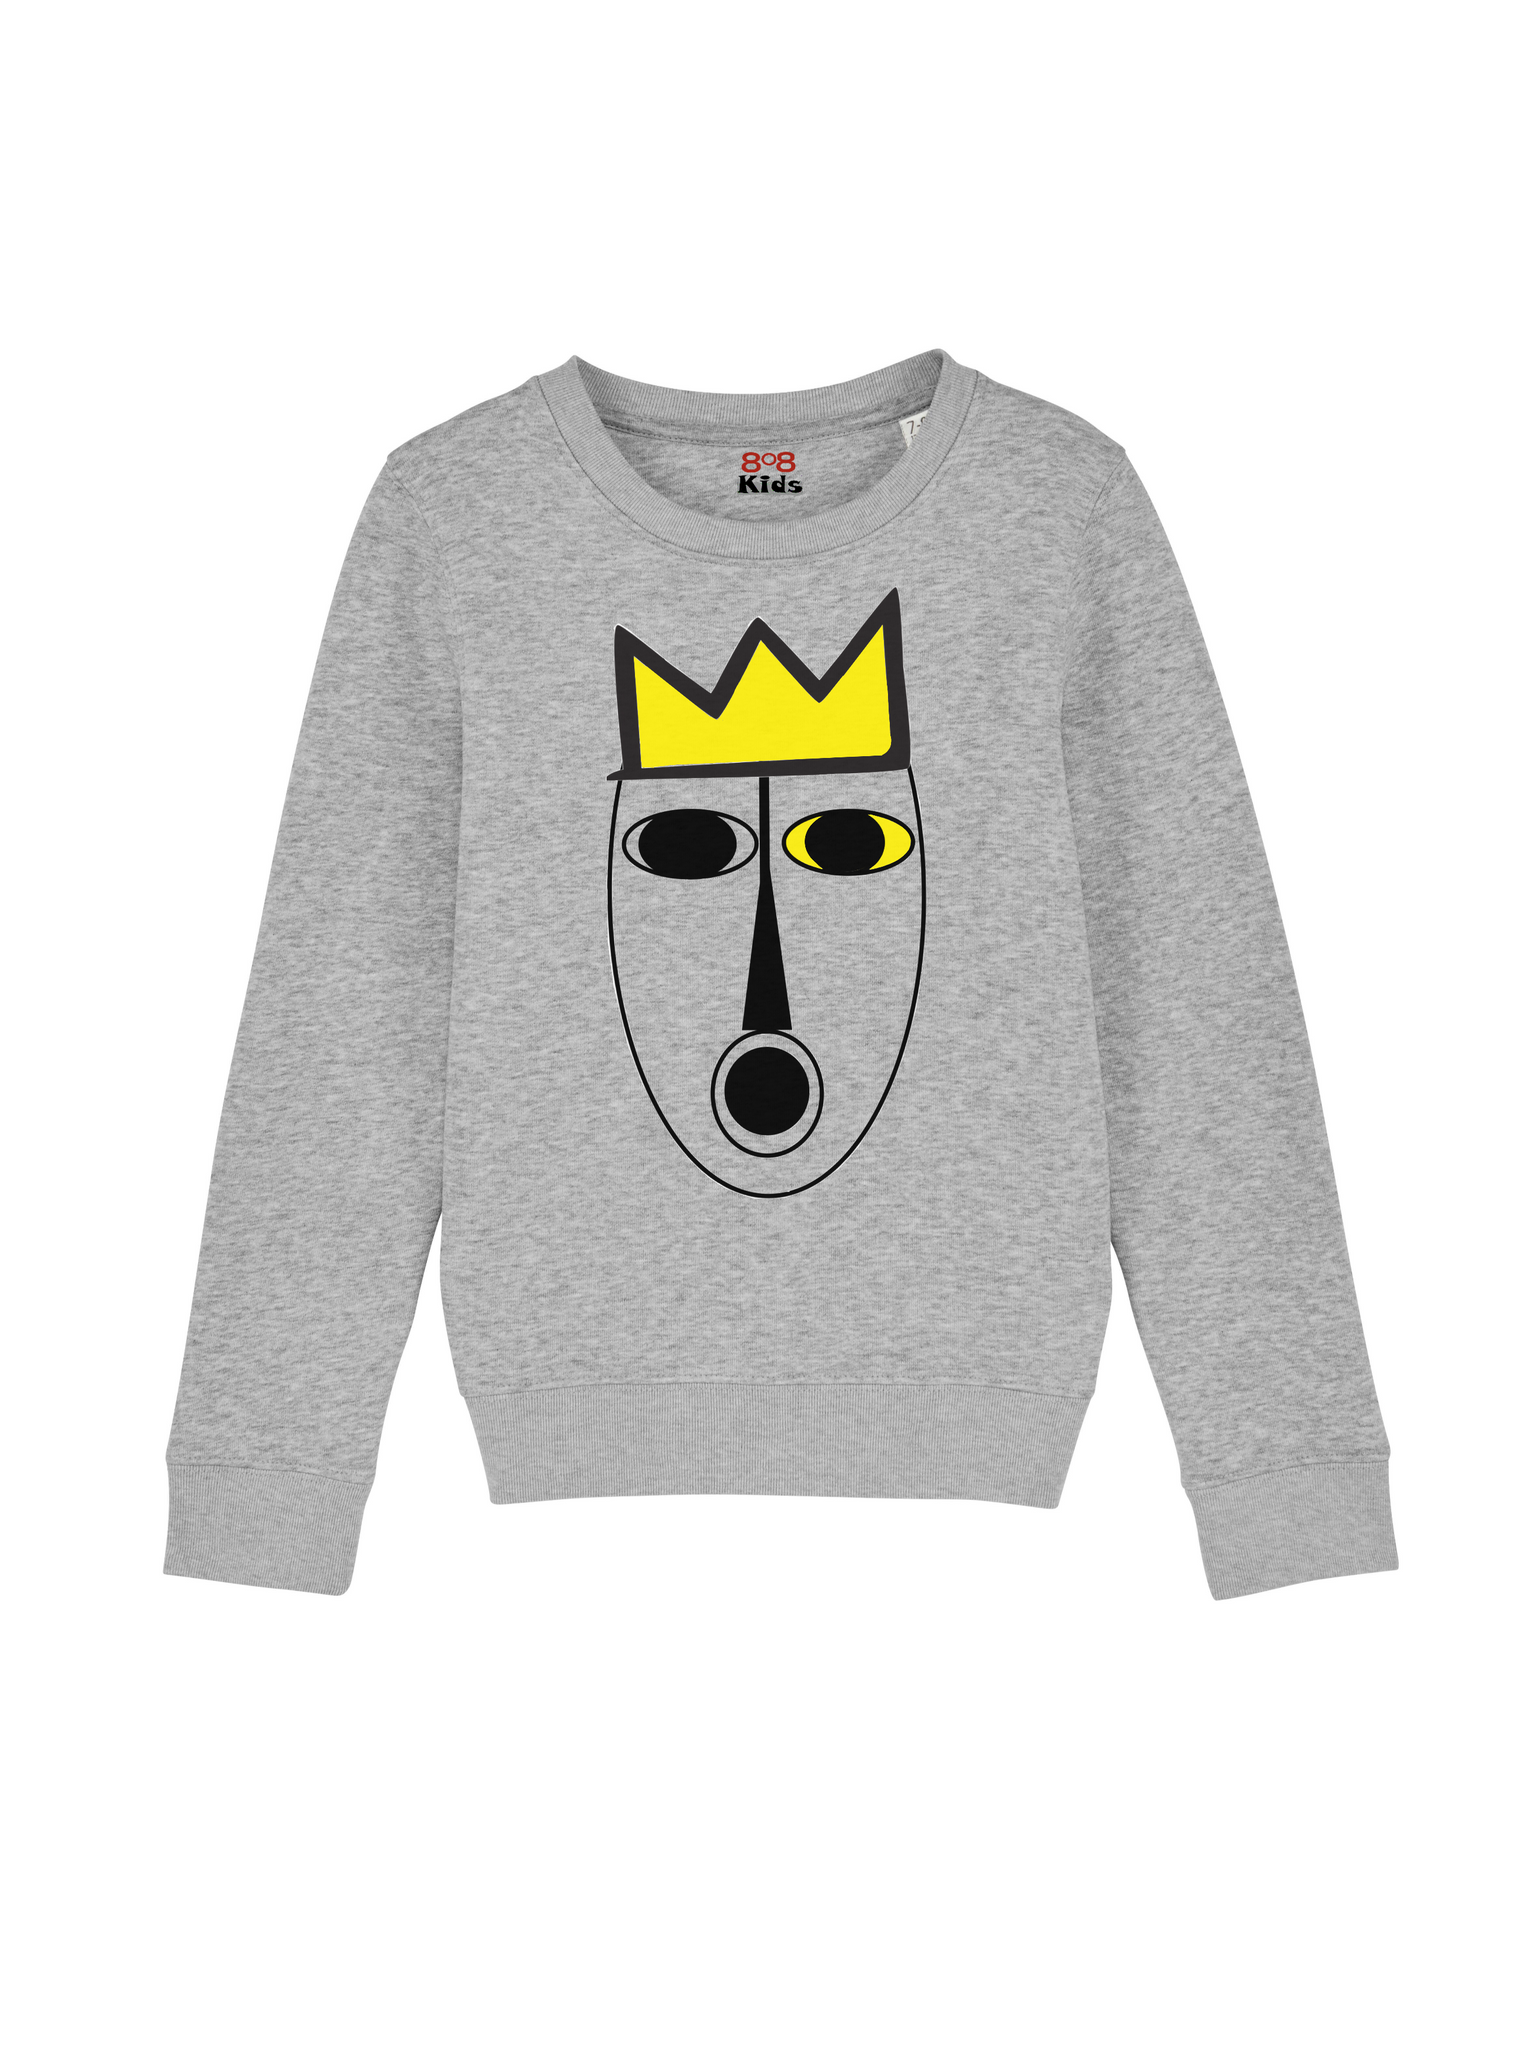 Kinging Sweatshirt - Grey | 808 kids